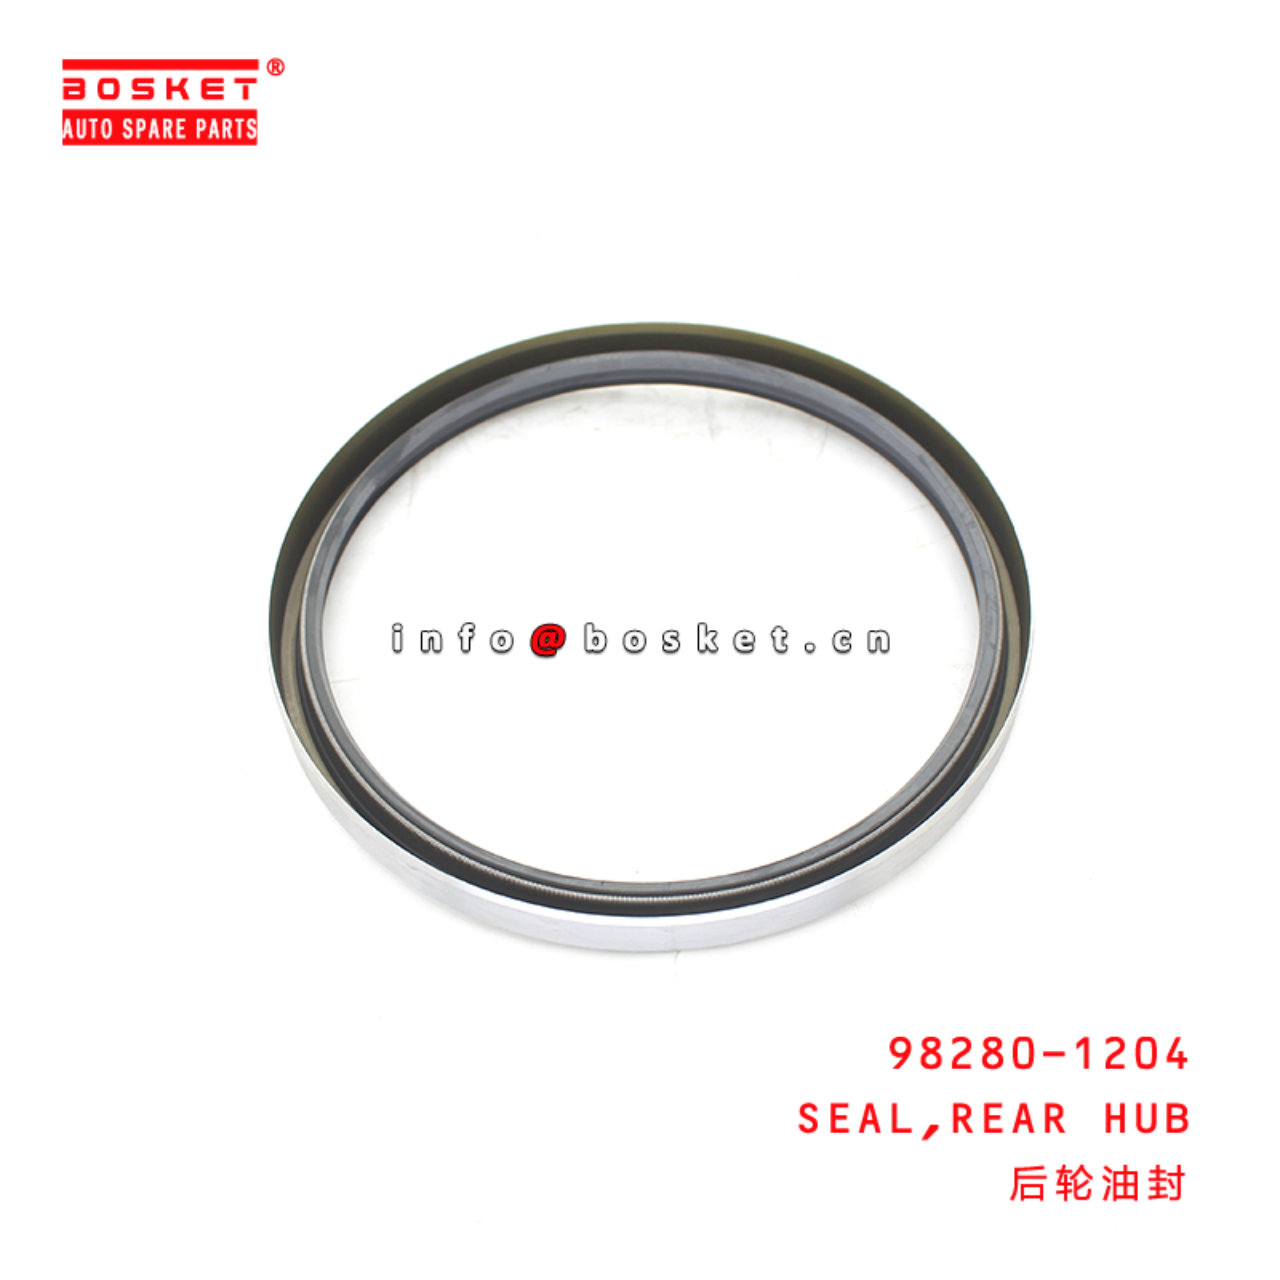 98280-1204 Rear Hub Seal Suitable for ISUZU HINO